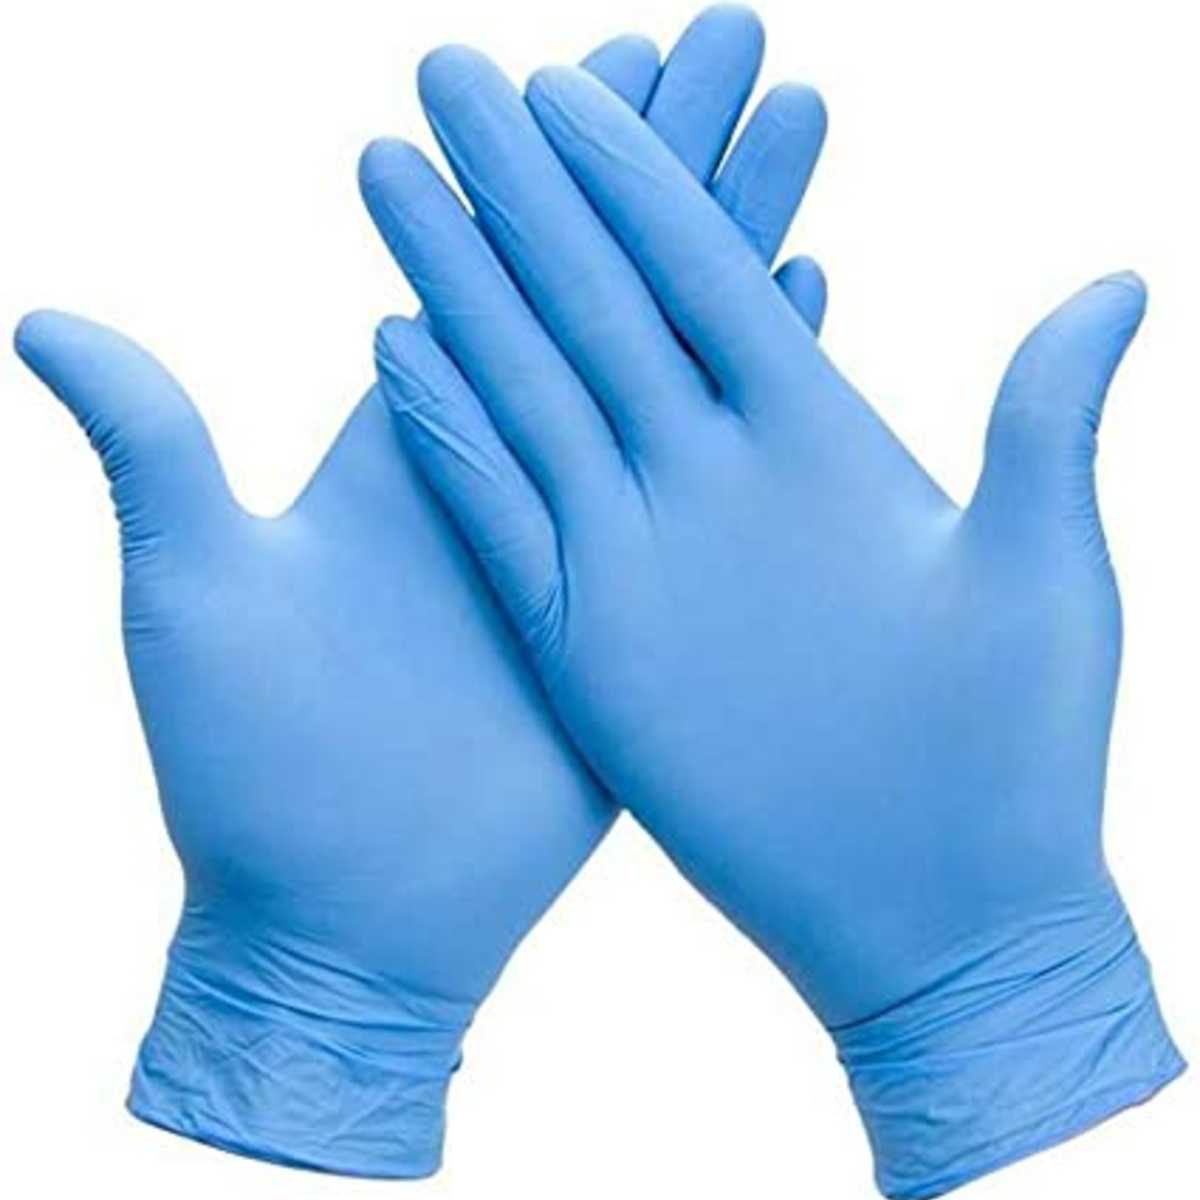 Large, Nitrile Examination Glove, Powder Free